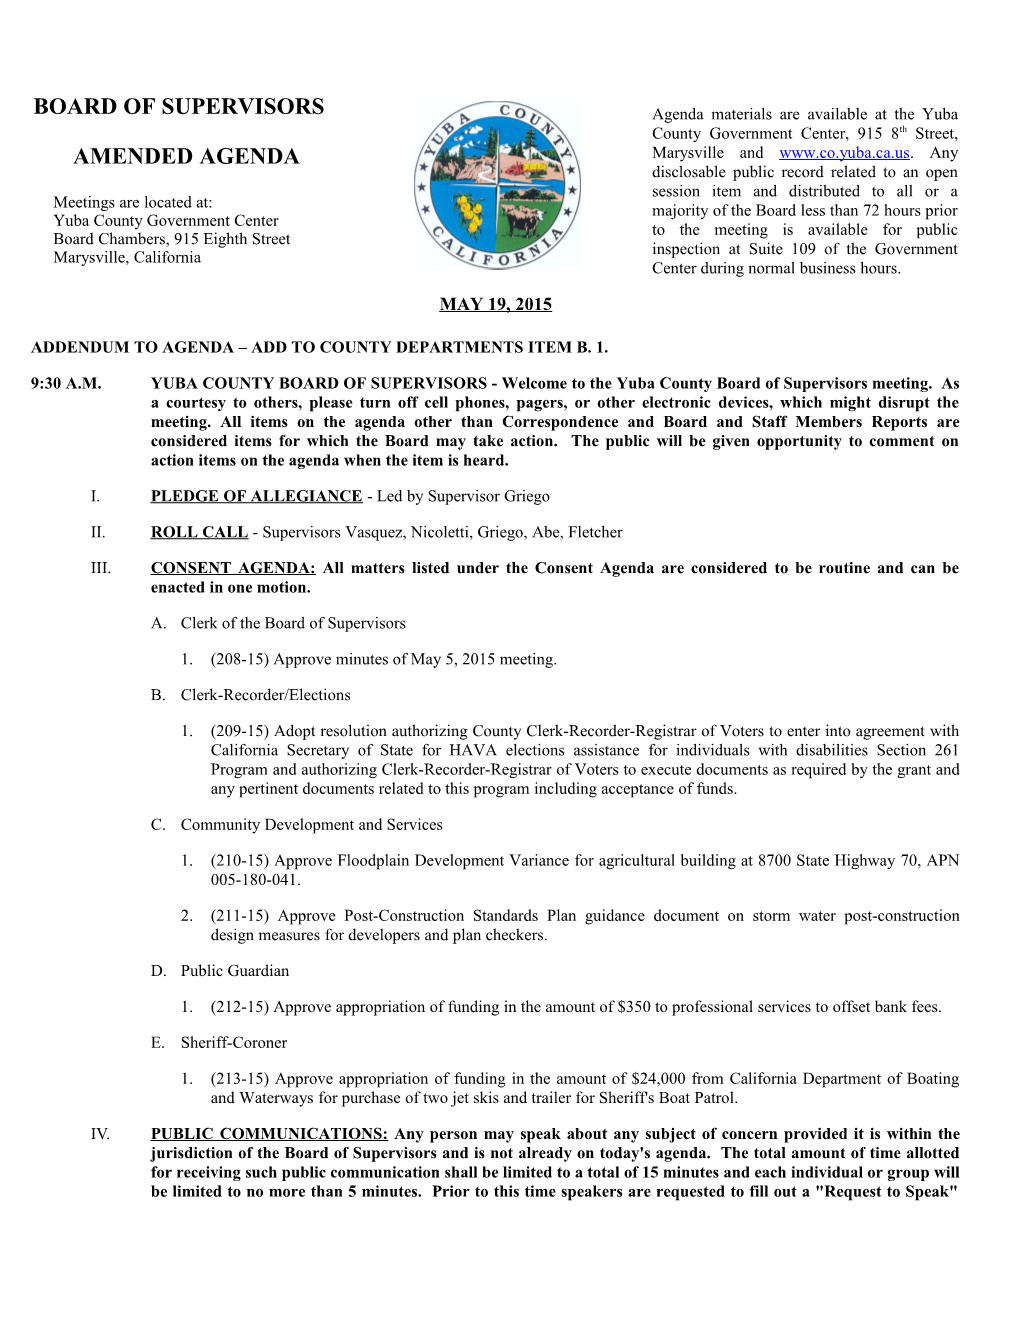 Addendum to Agenda Add to County Departments Item B. 1